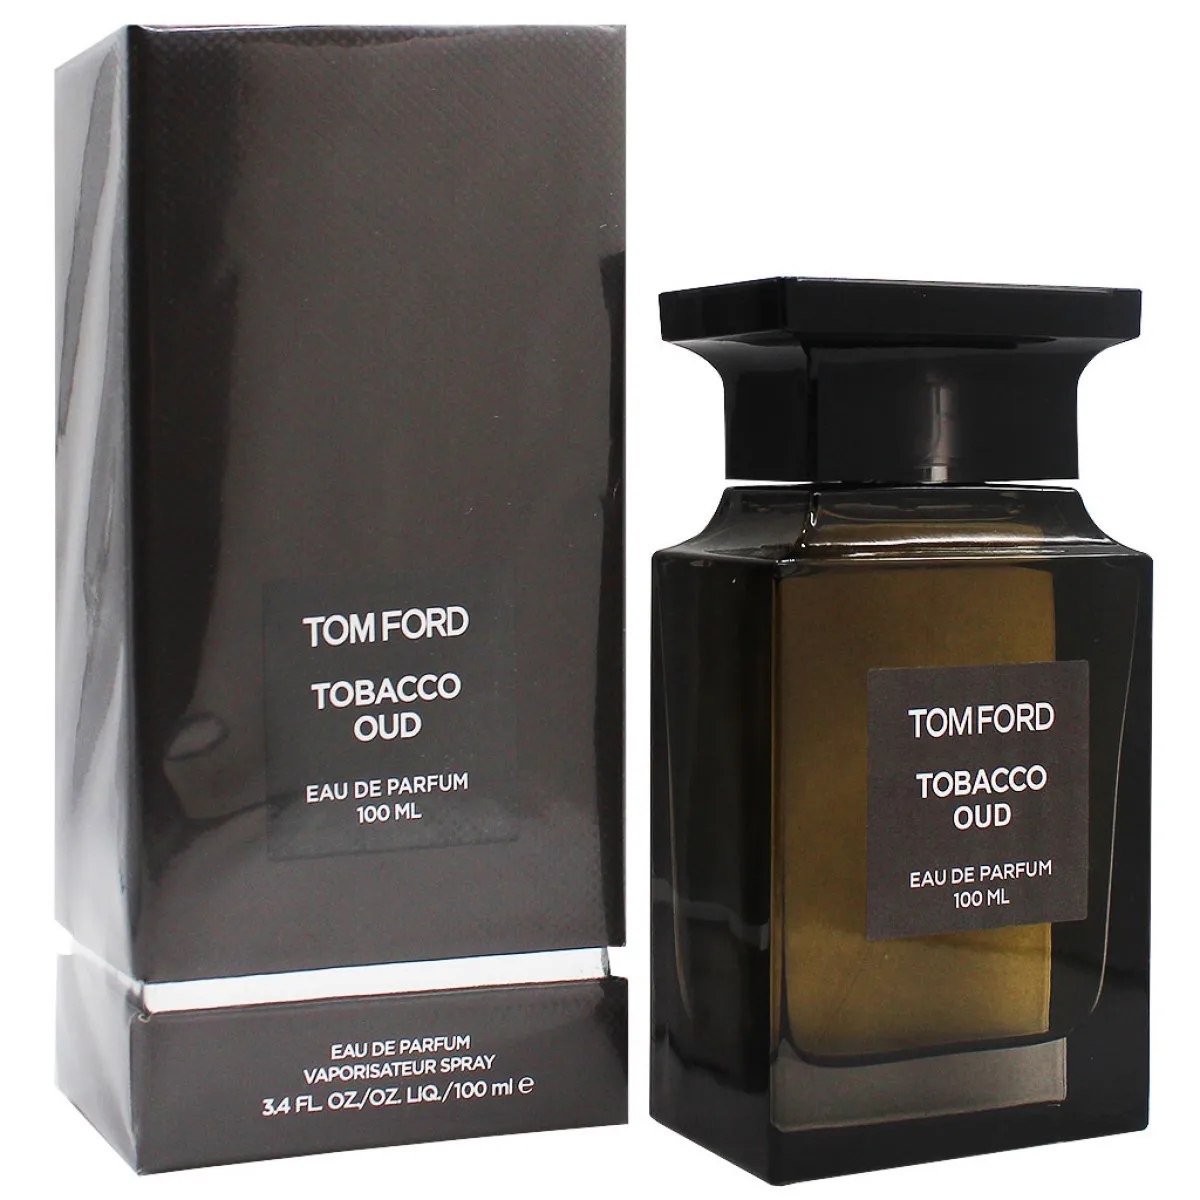 Tom Ford Tobacco oud. Tom Ford Tobacco oud 50 ml. Tom Ford 100ml. Tom Ford Tobacco oud intense.